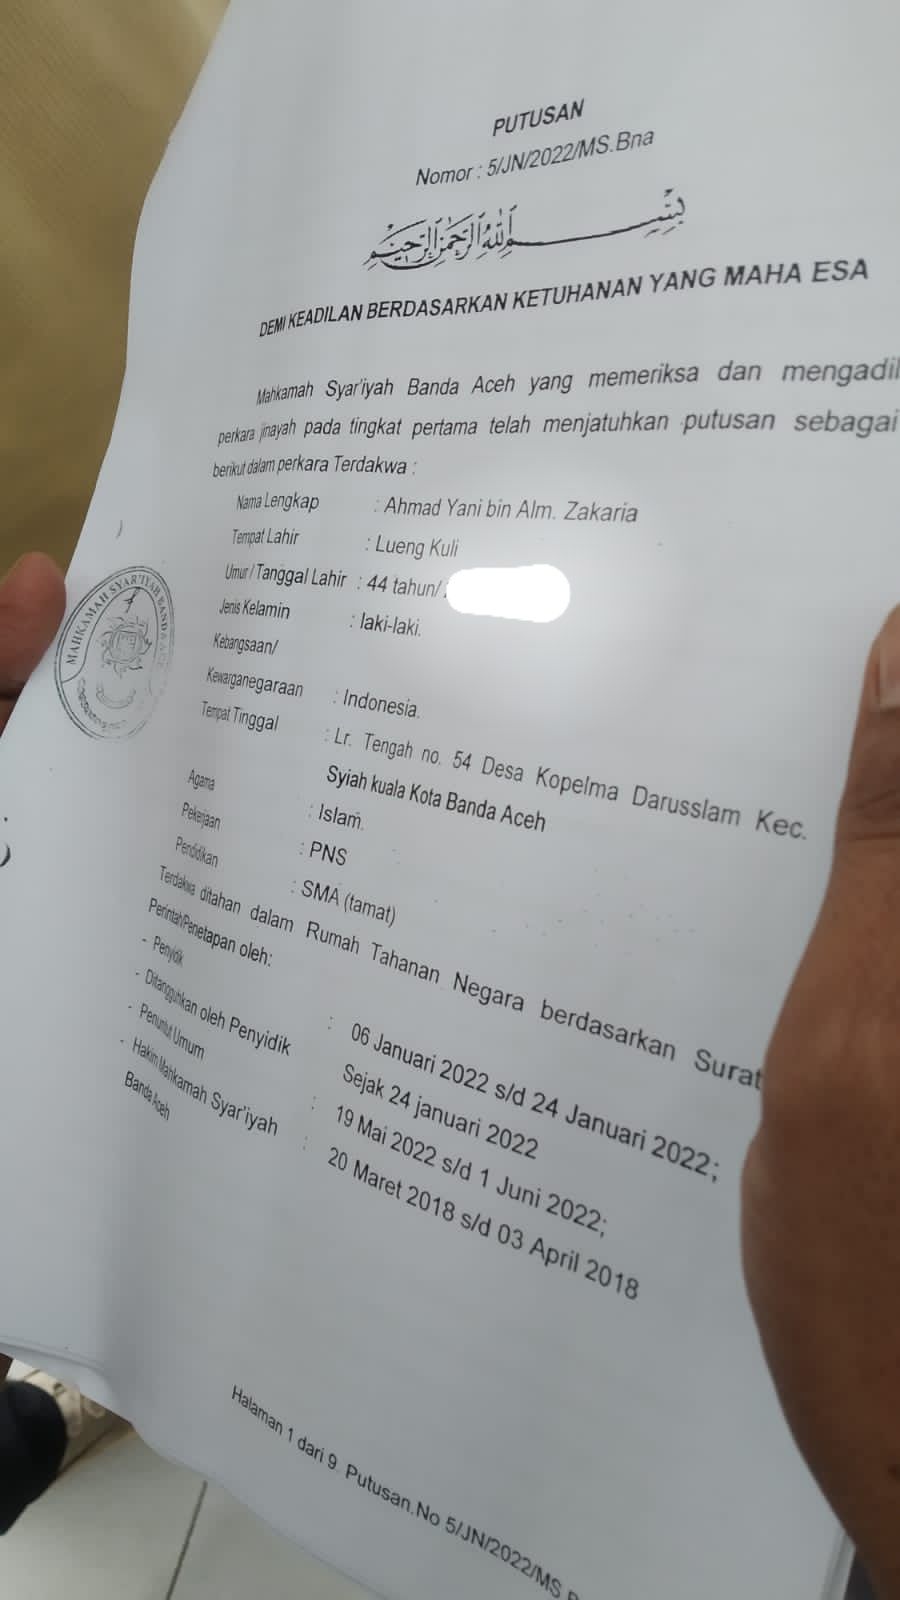 Surat Putusan Hukum Cambuk Mahkamah Syar'iyah Kota Banda Aceh